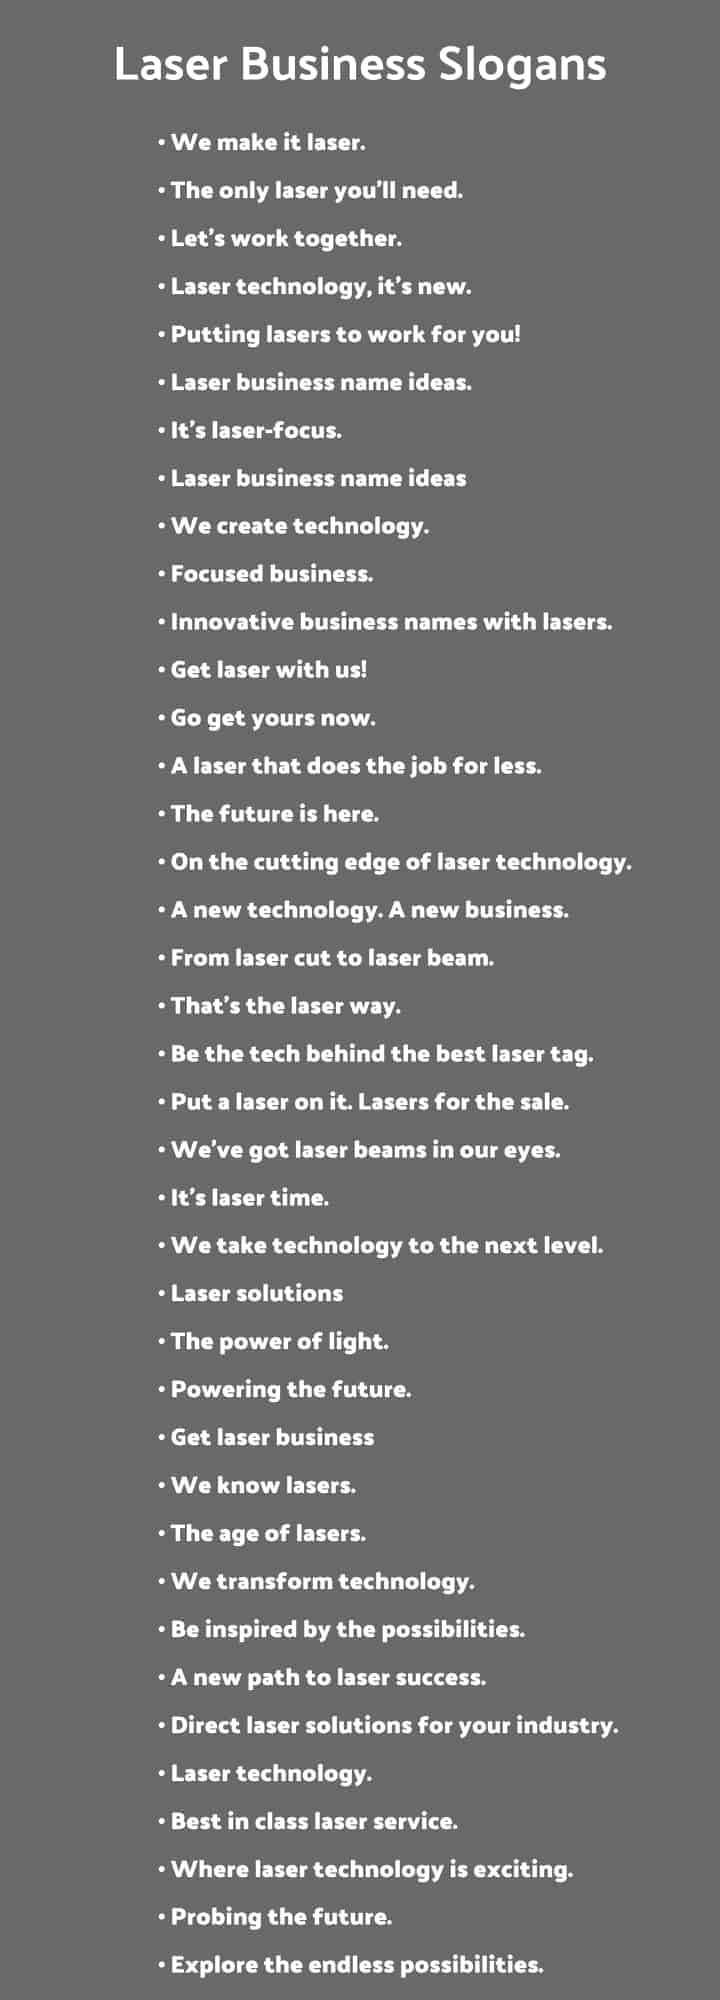 Laser Business Slogans Ideas List for You